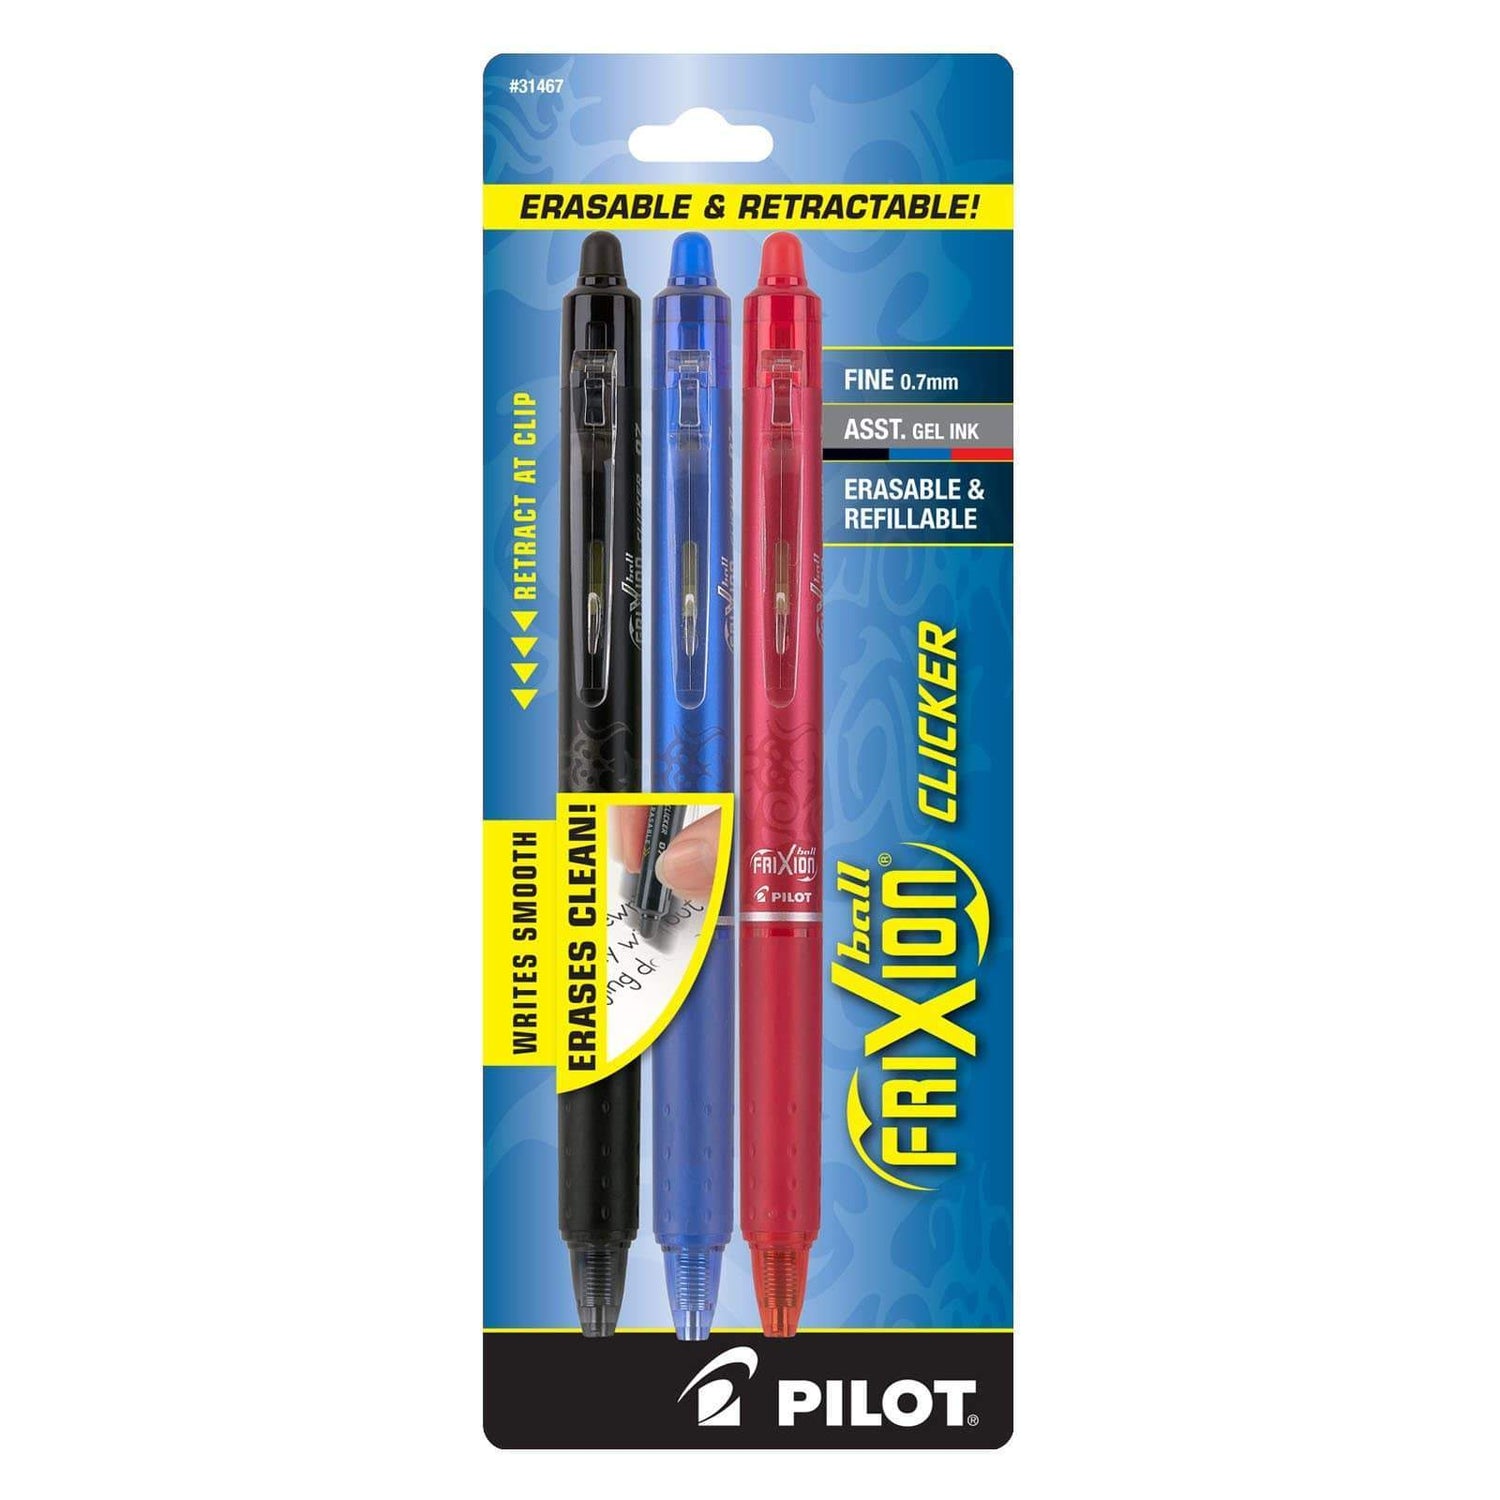 Pilot Frixion Erasable Pens Rocketbook